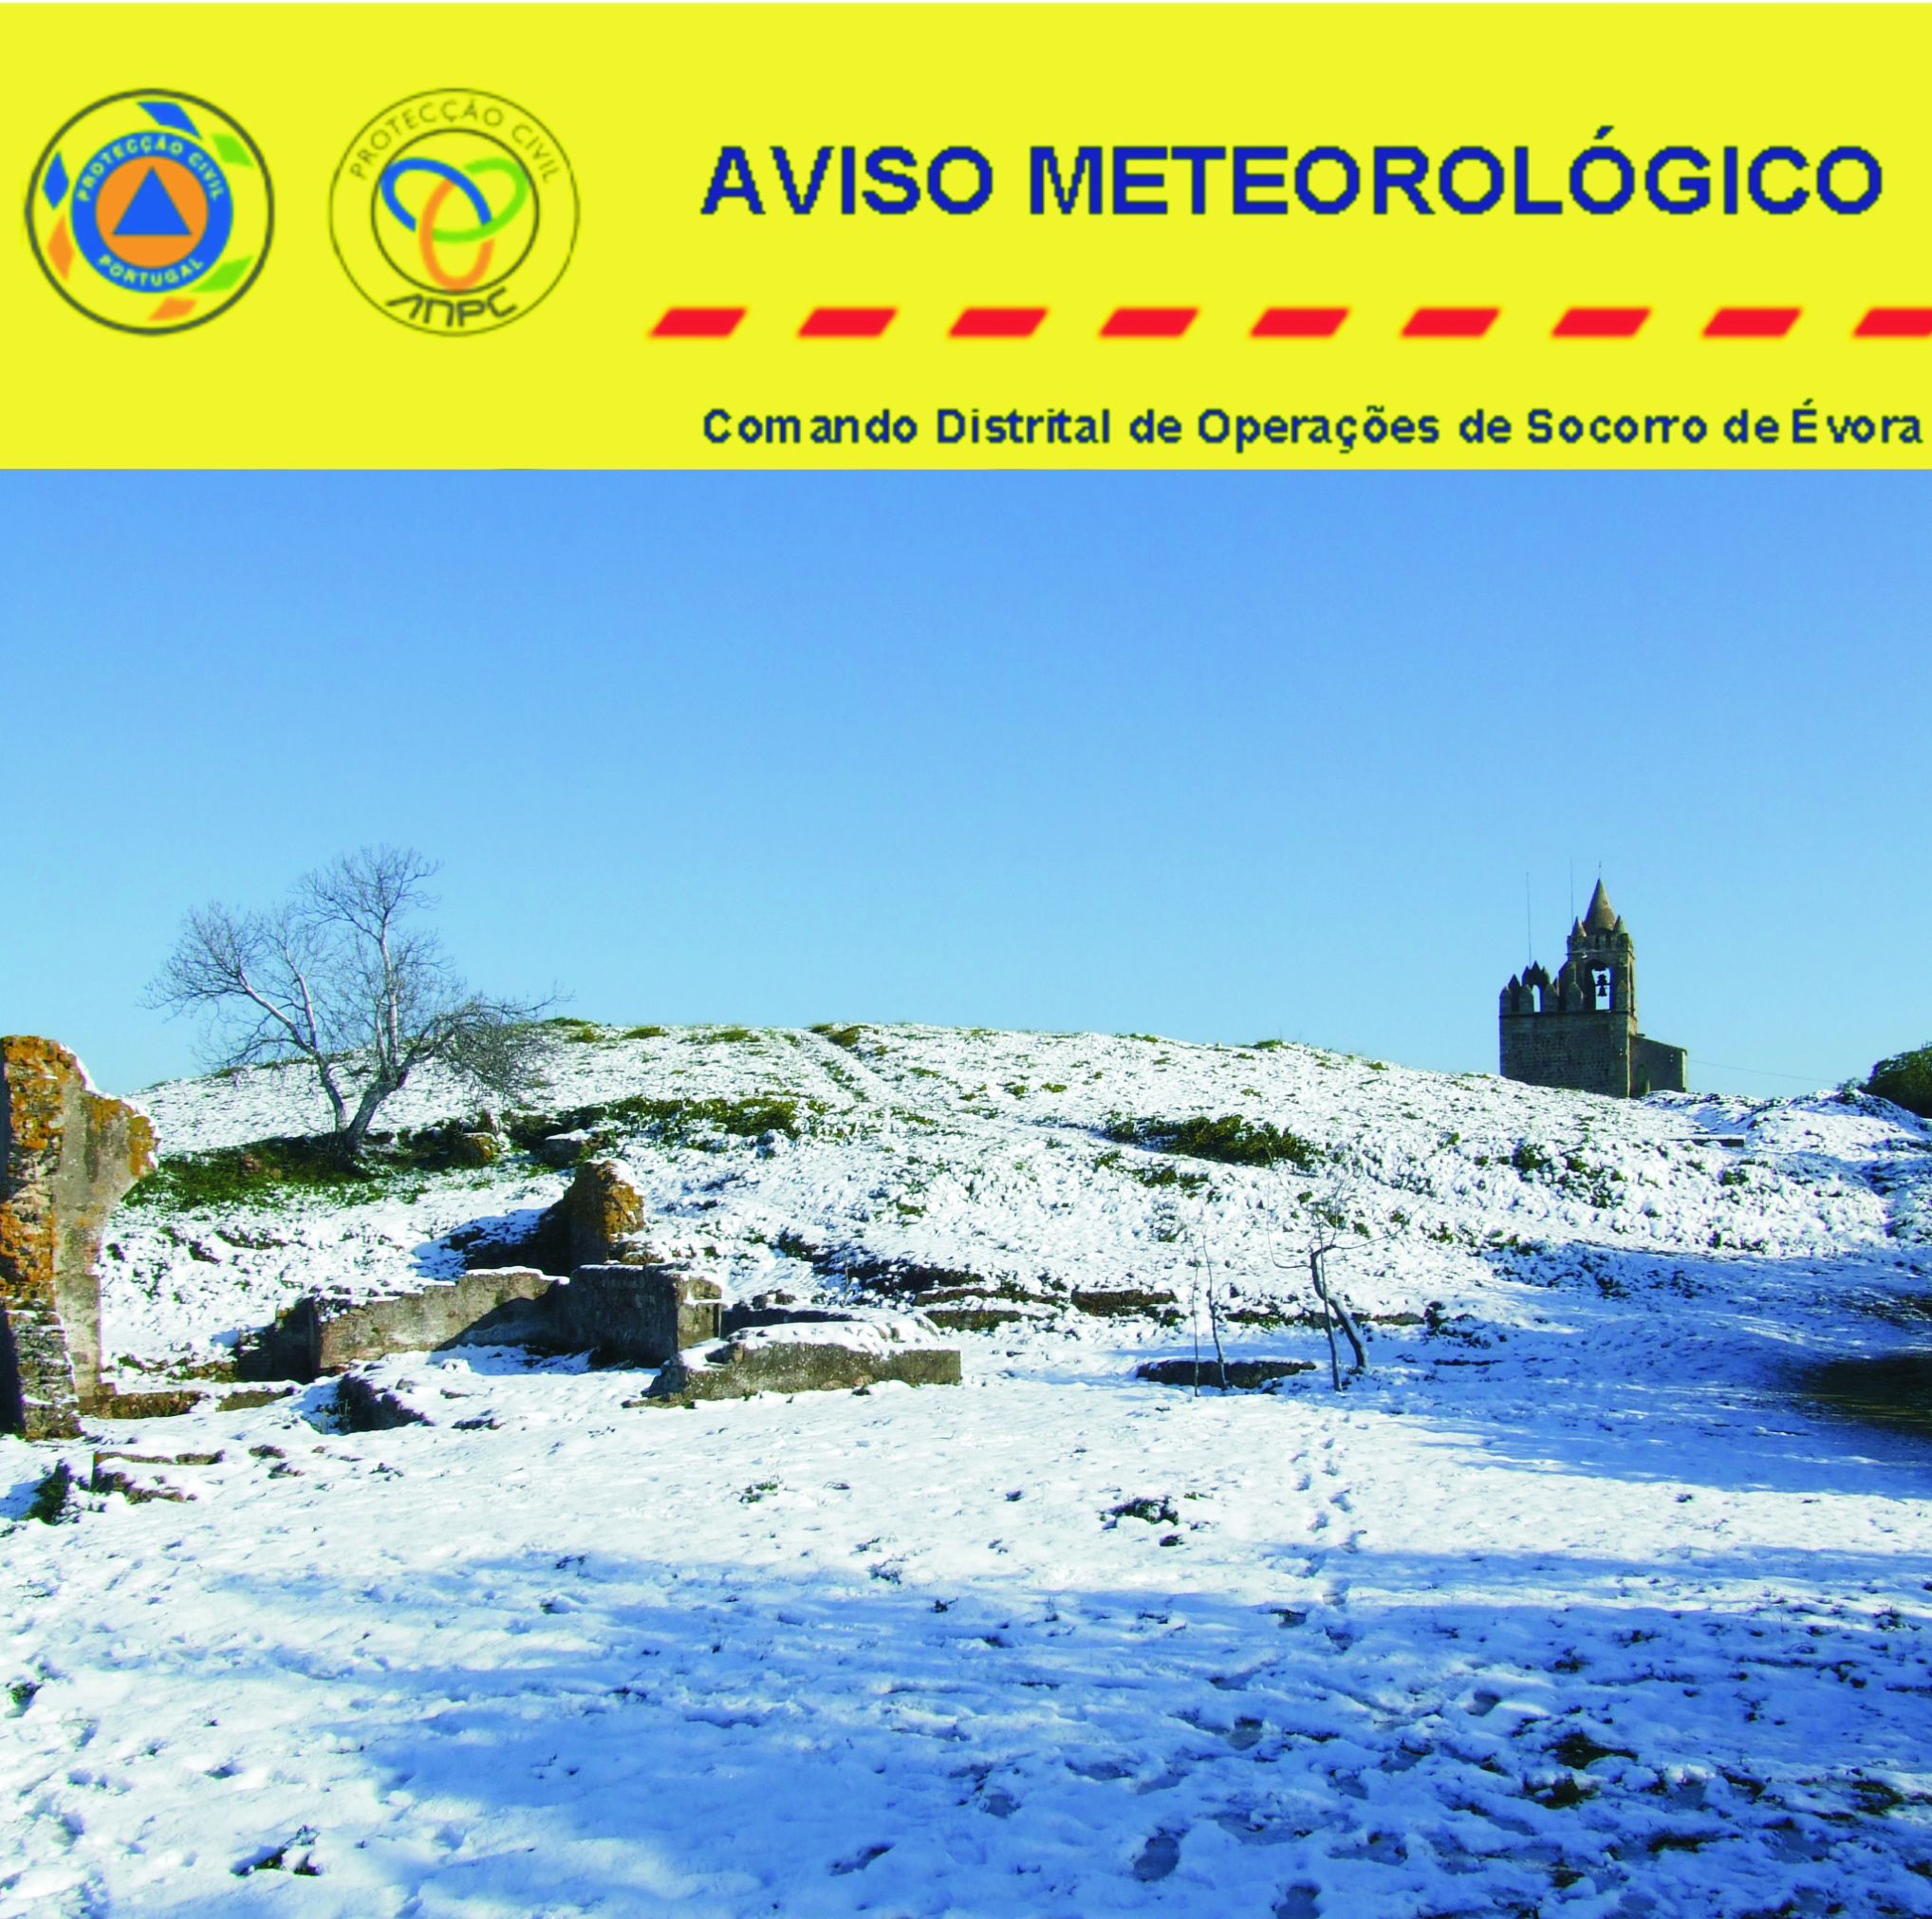 Aviso Meteorológico de Alerta AMARELO para TEMPO FRIO, no Distrito de Évora